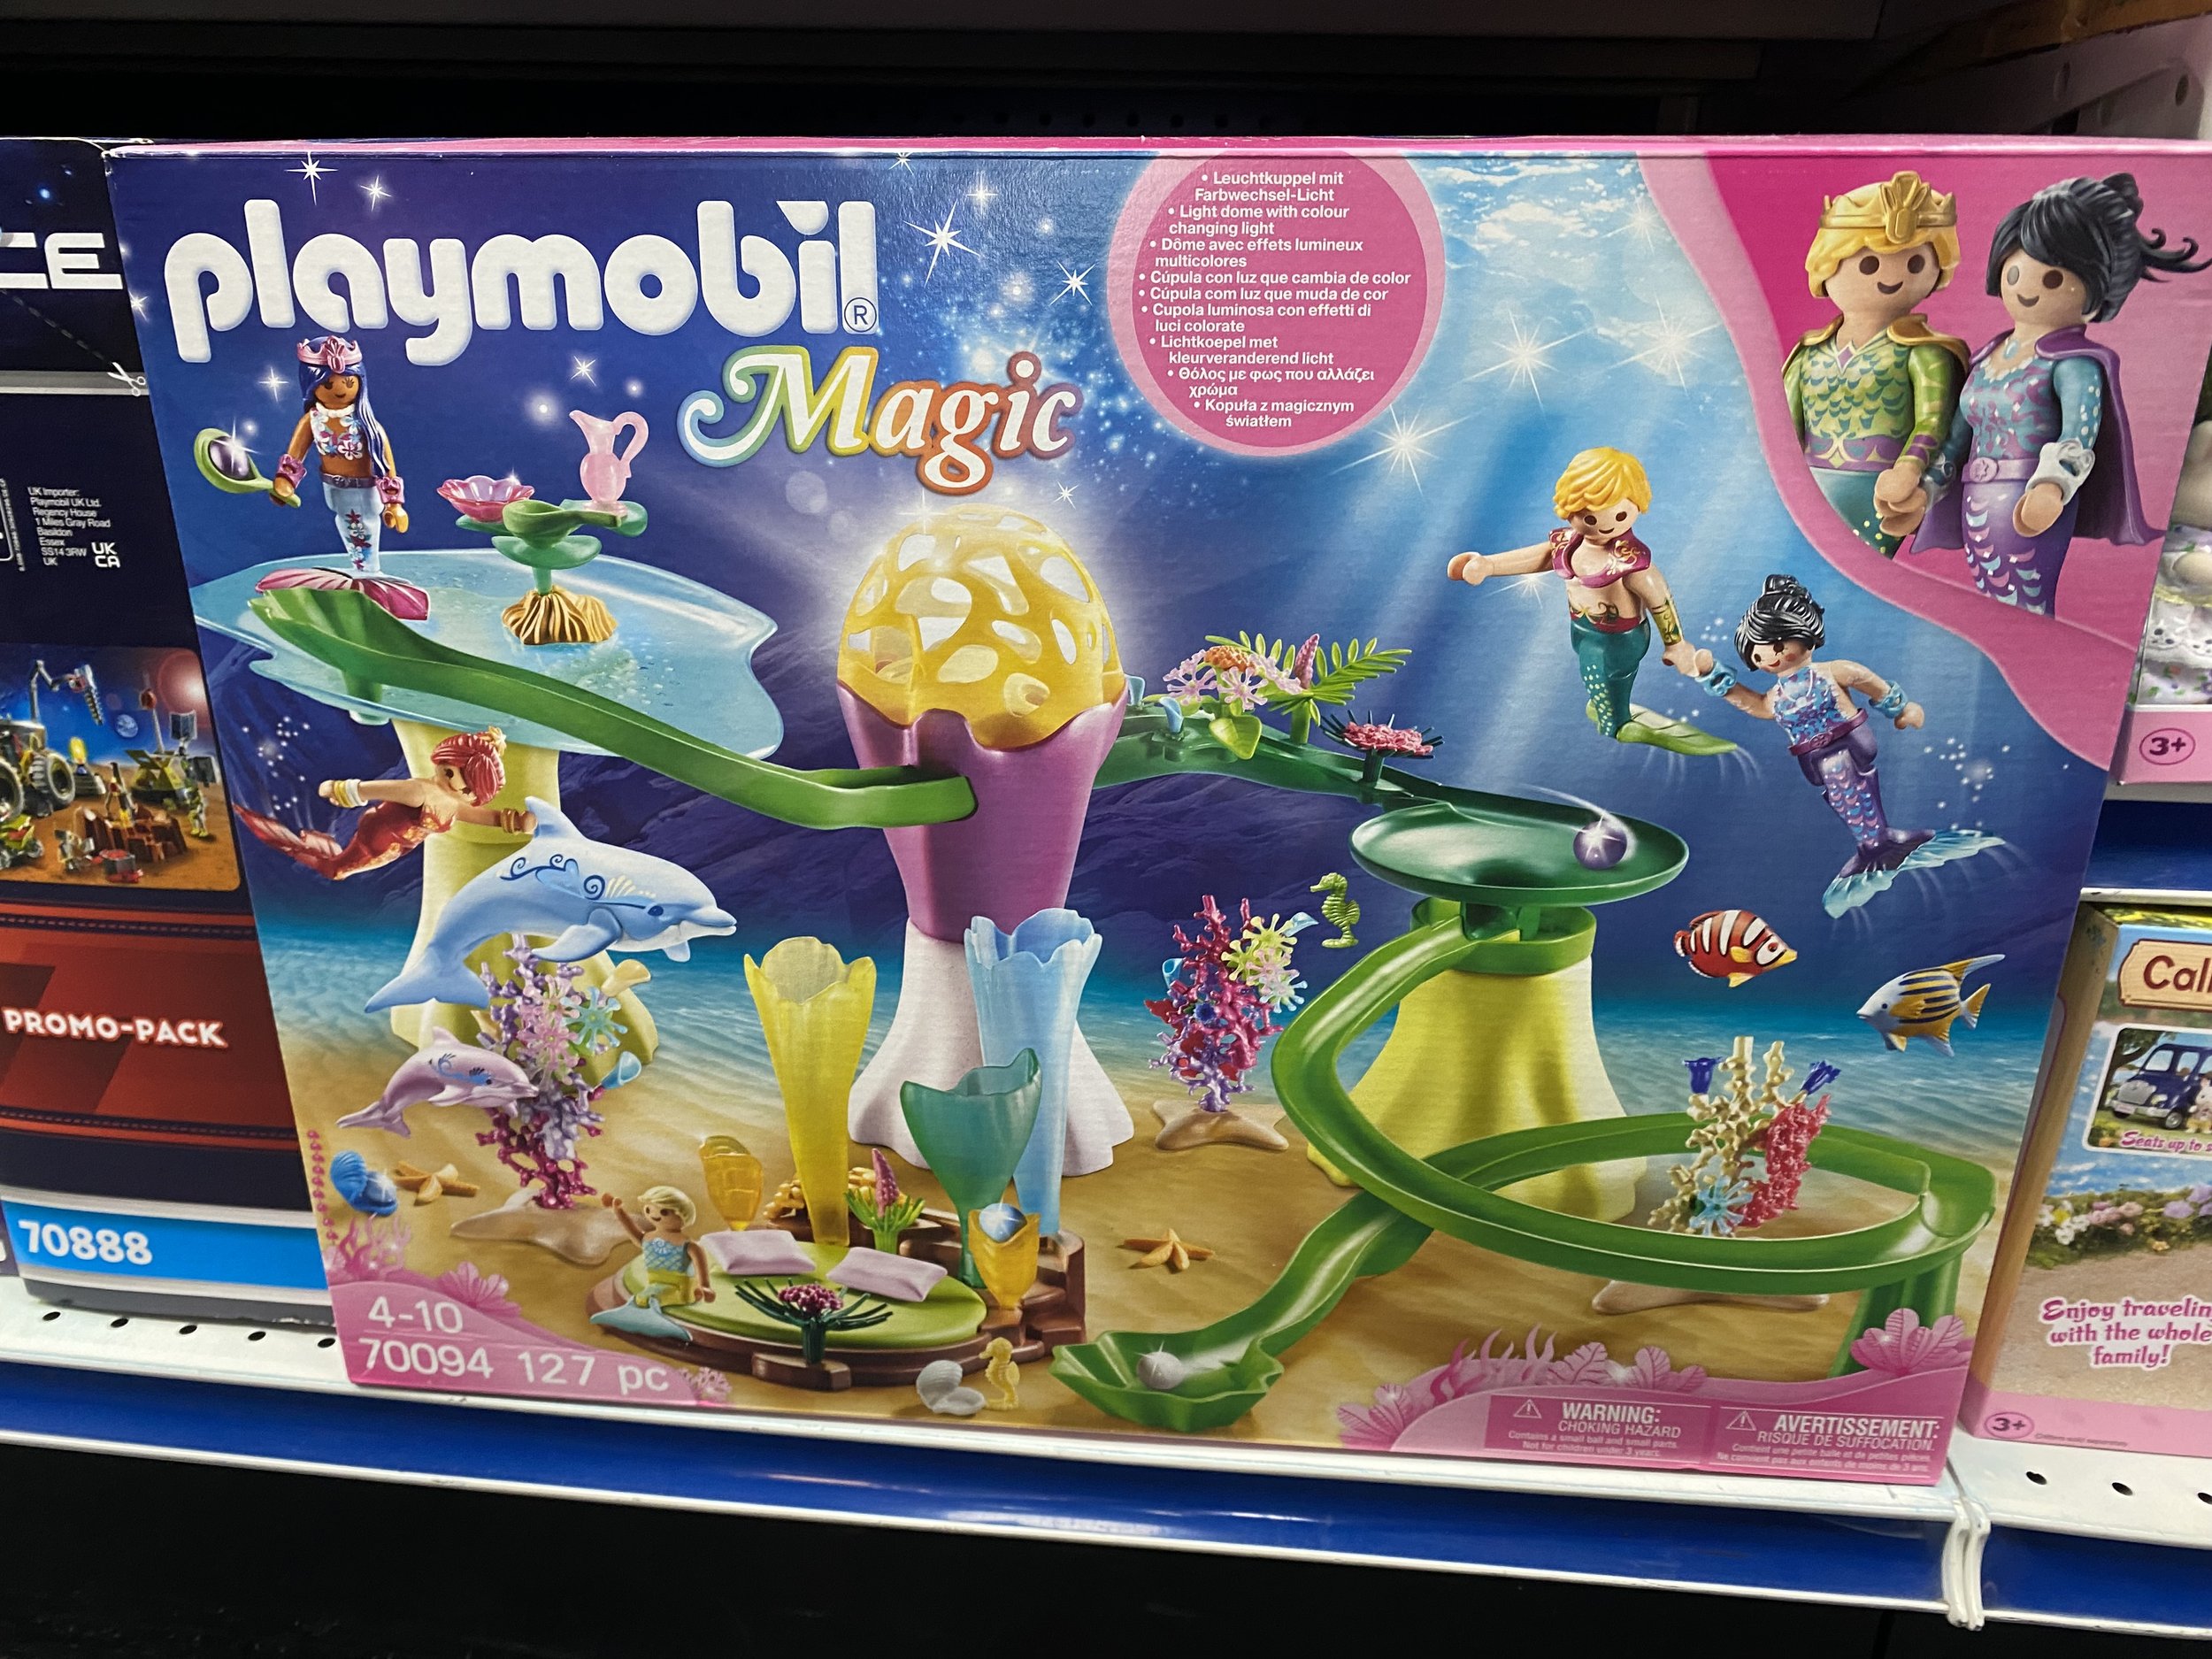 Playmobil magic.jpg